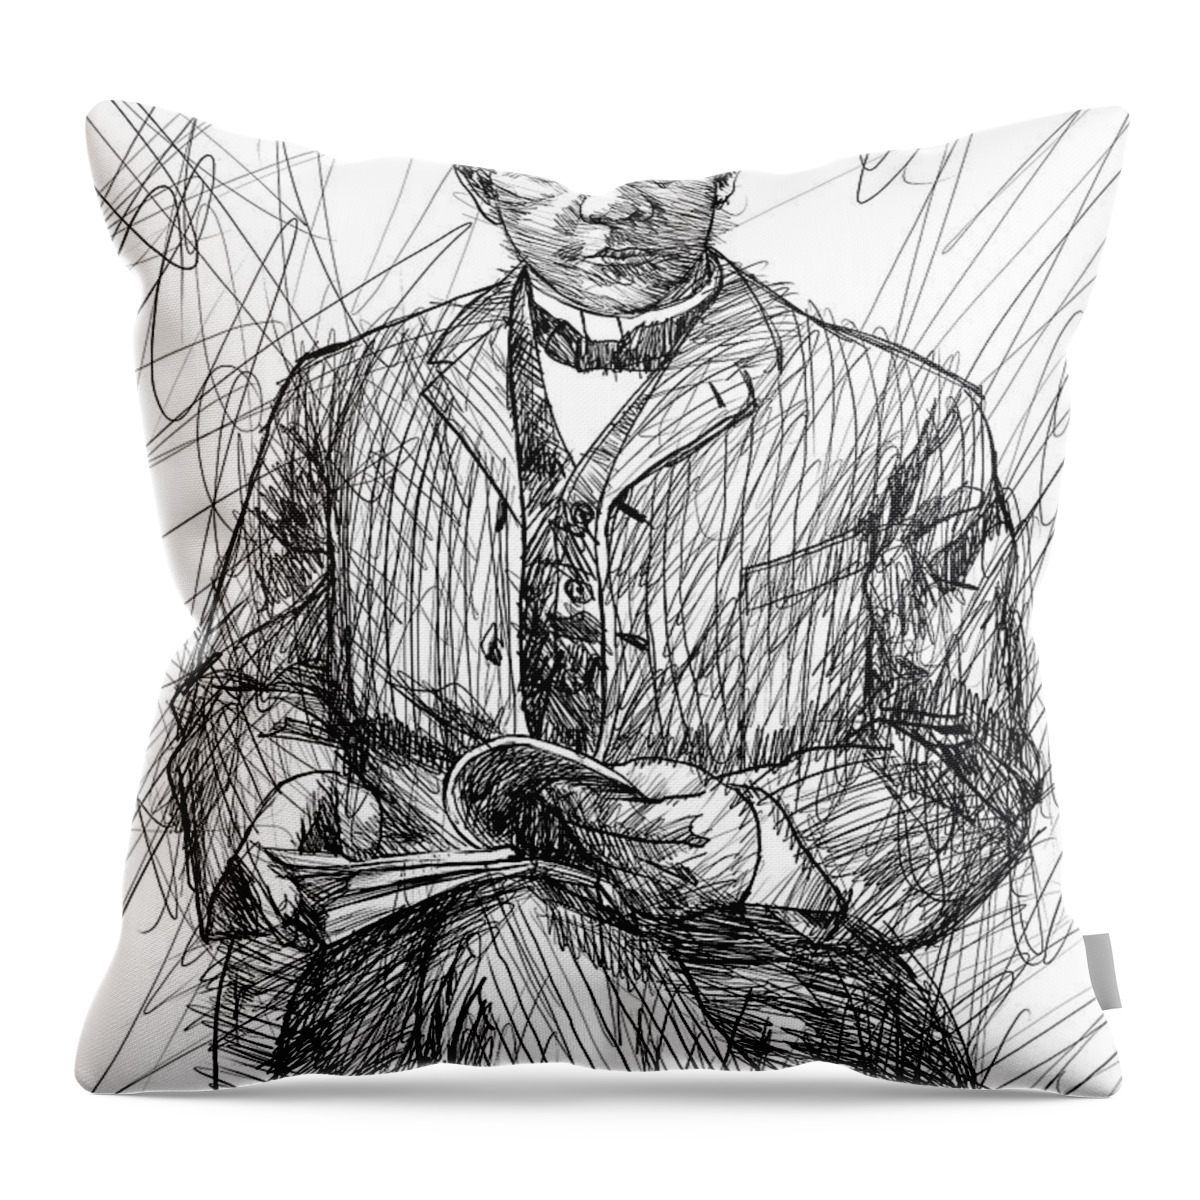 Booker T Washington Throw Pillow featuring the drawing BOOKER T. WASHINGTON ink portrait by Fabrizio Cassetta